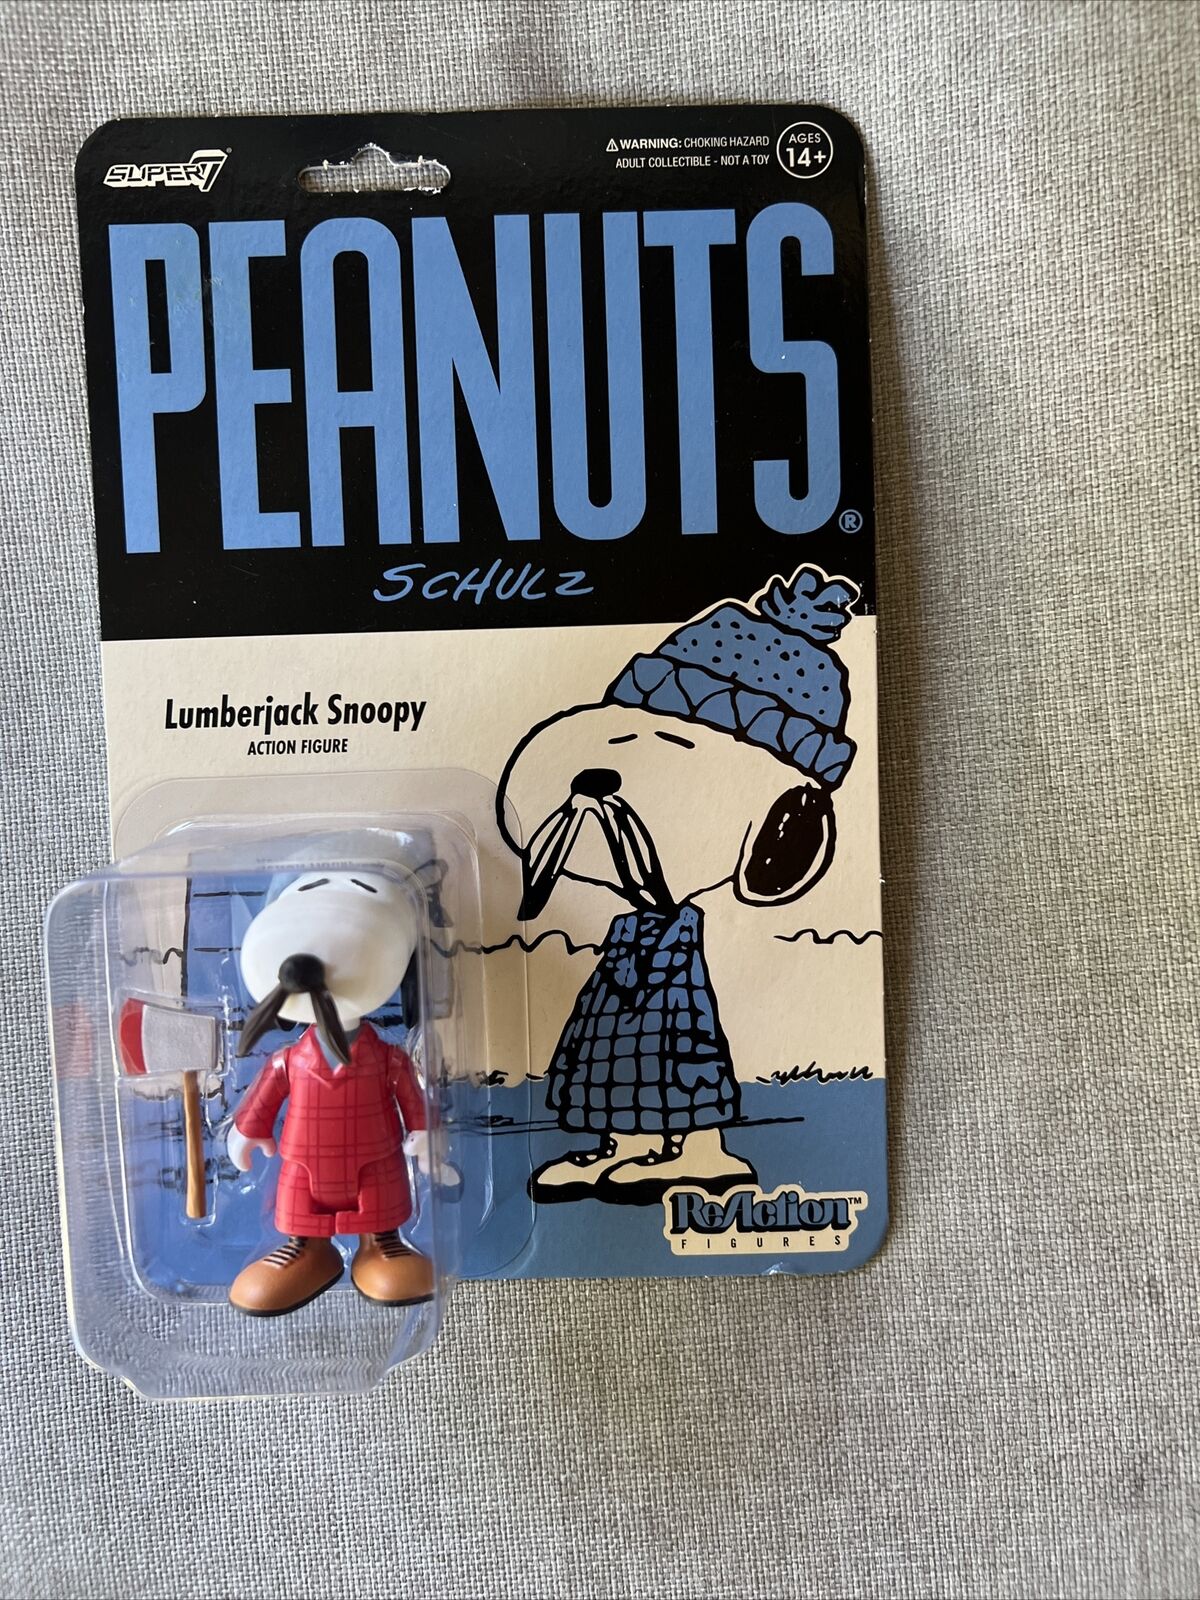 Lumberjack Snoopy Peanuts Super 7 Reaction Action Figure